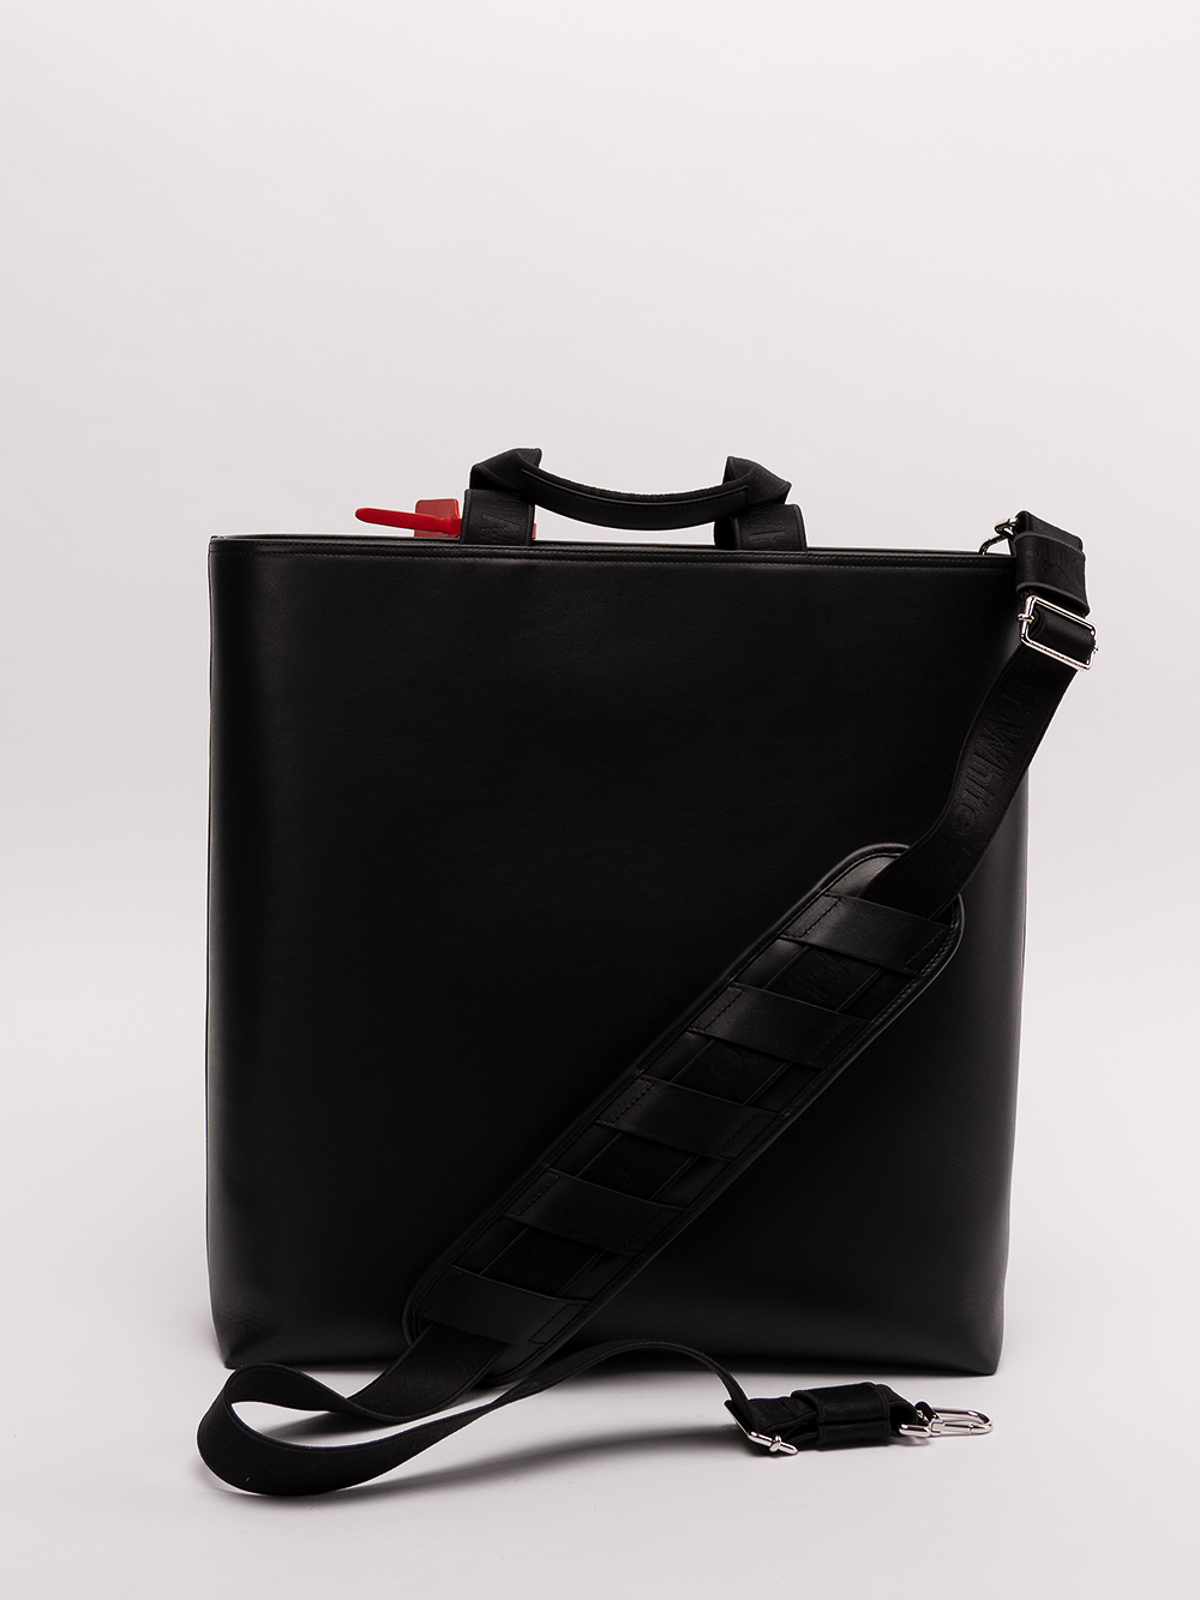 Off-White Hard Core Handbag